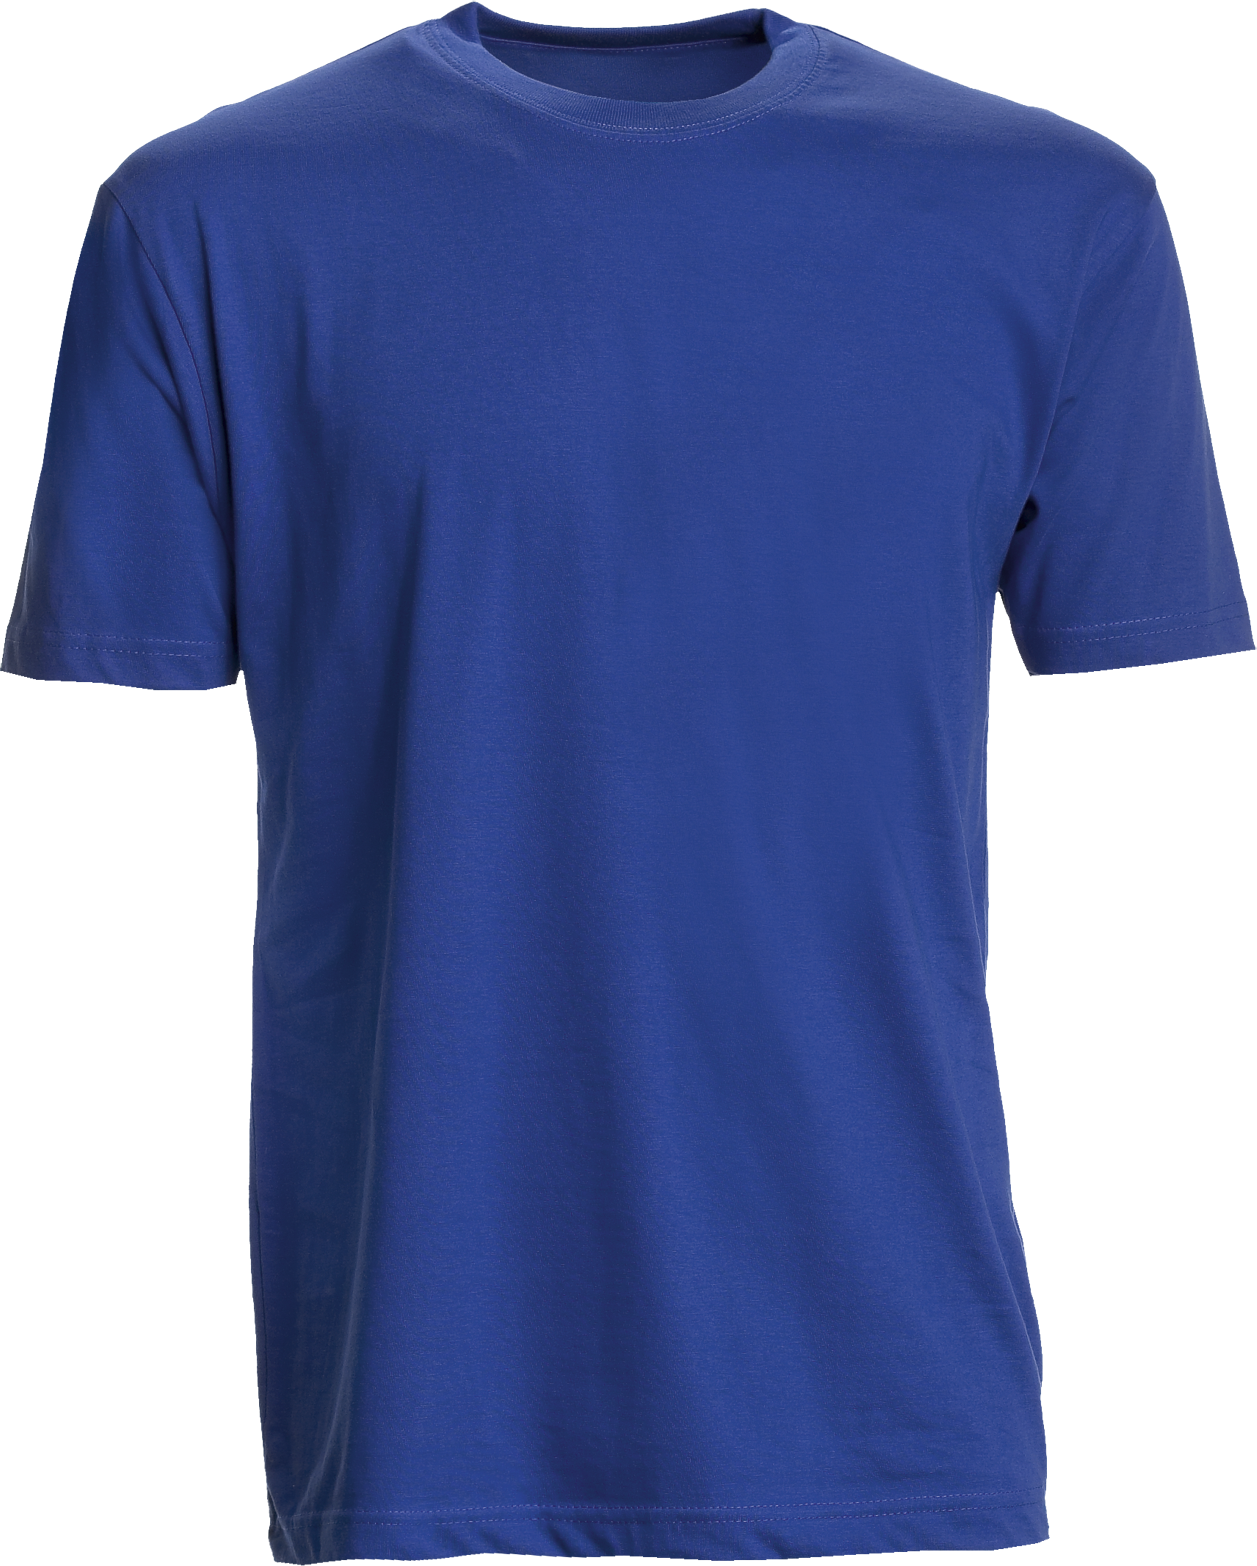 Kobolt Unisex T-shirt, Basic (8150101)